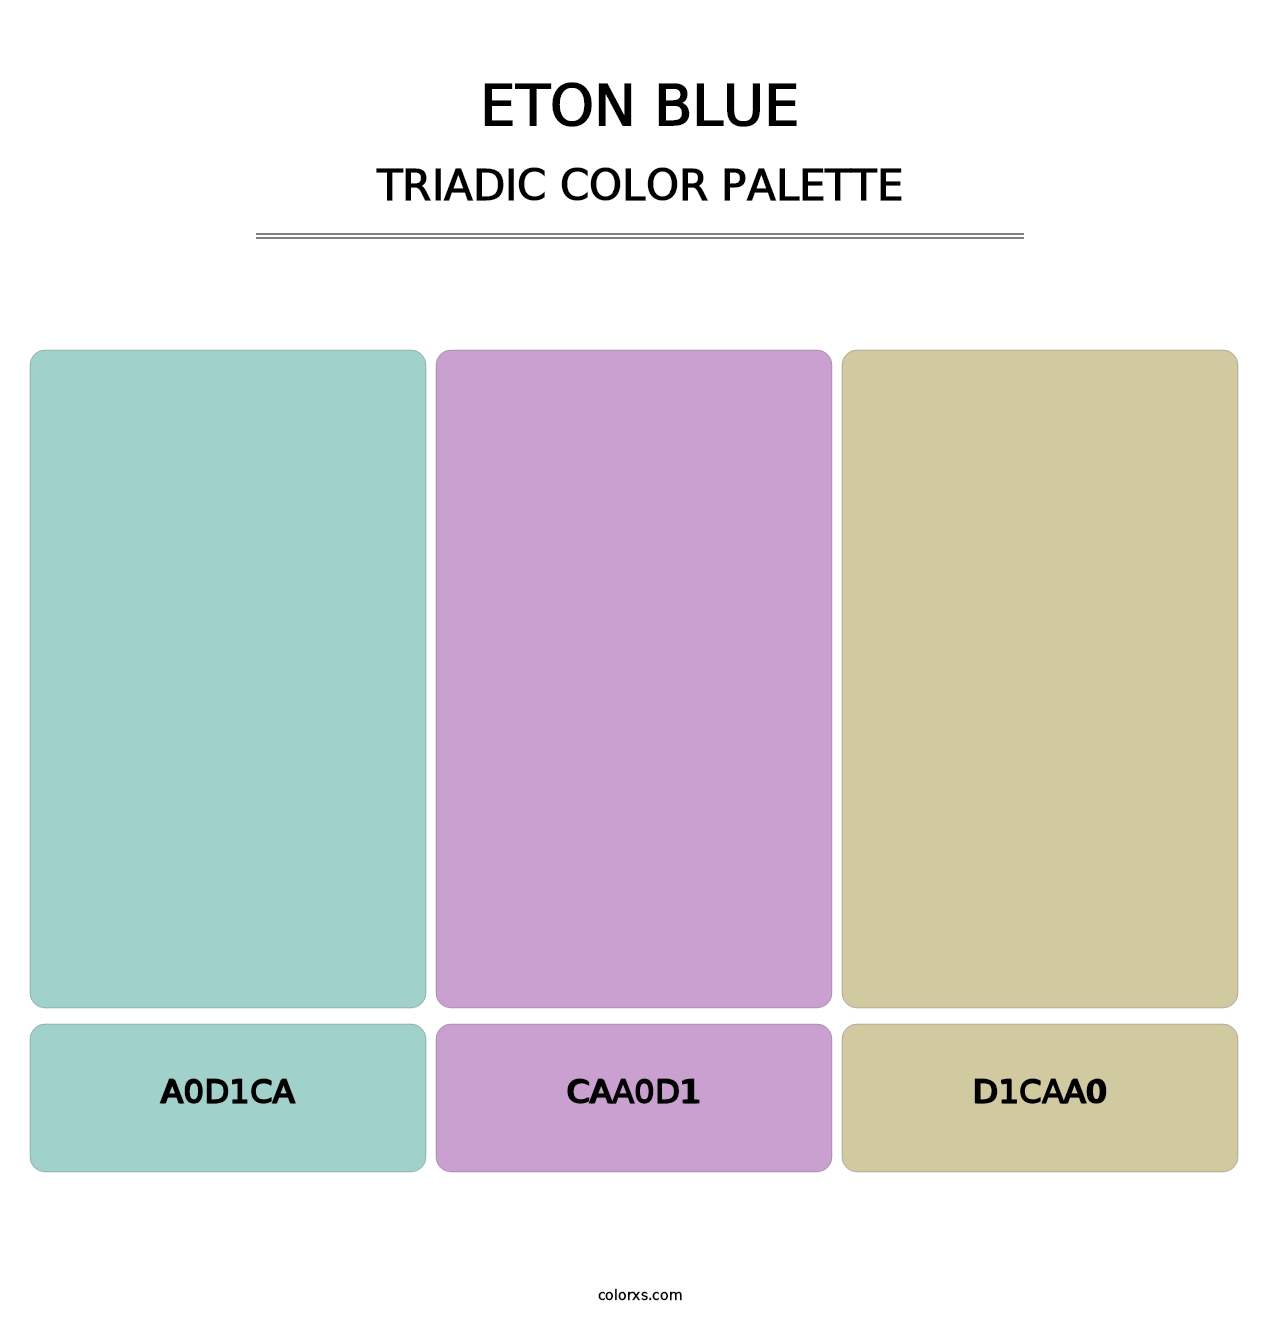 Eton blue - Triadic Color Palette